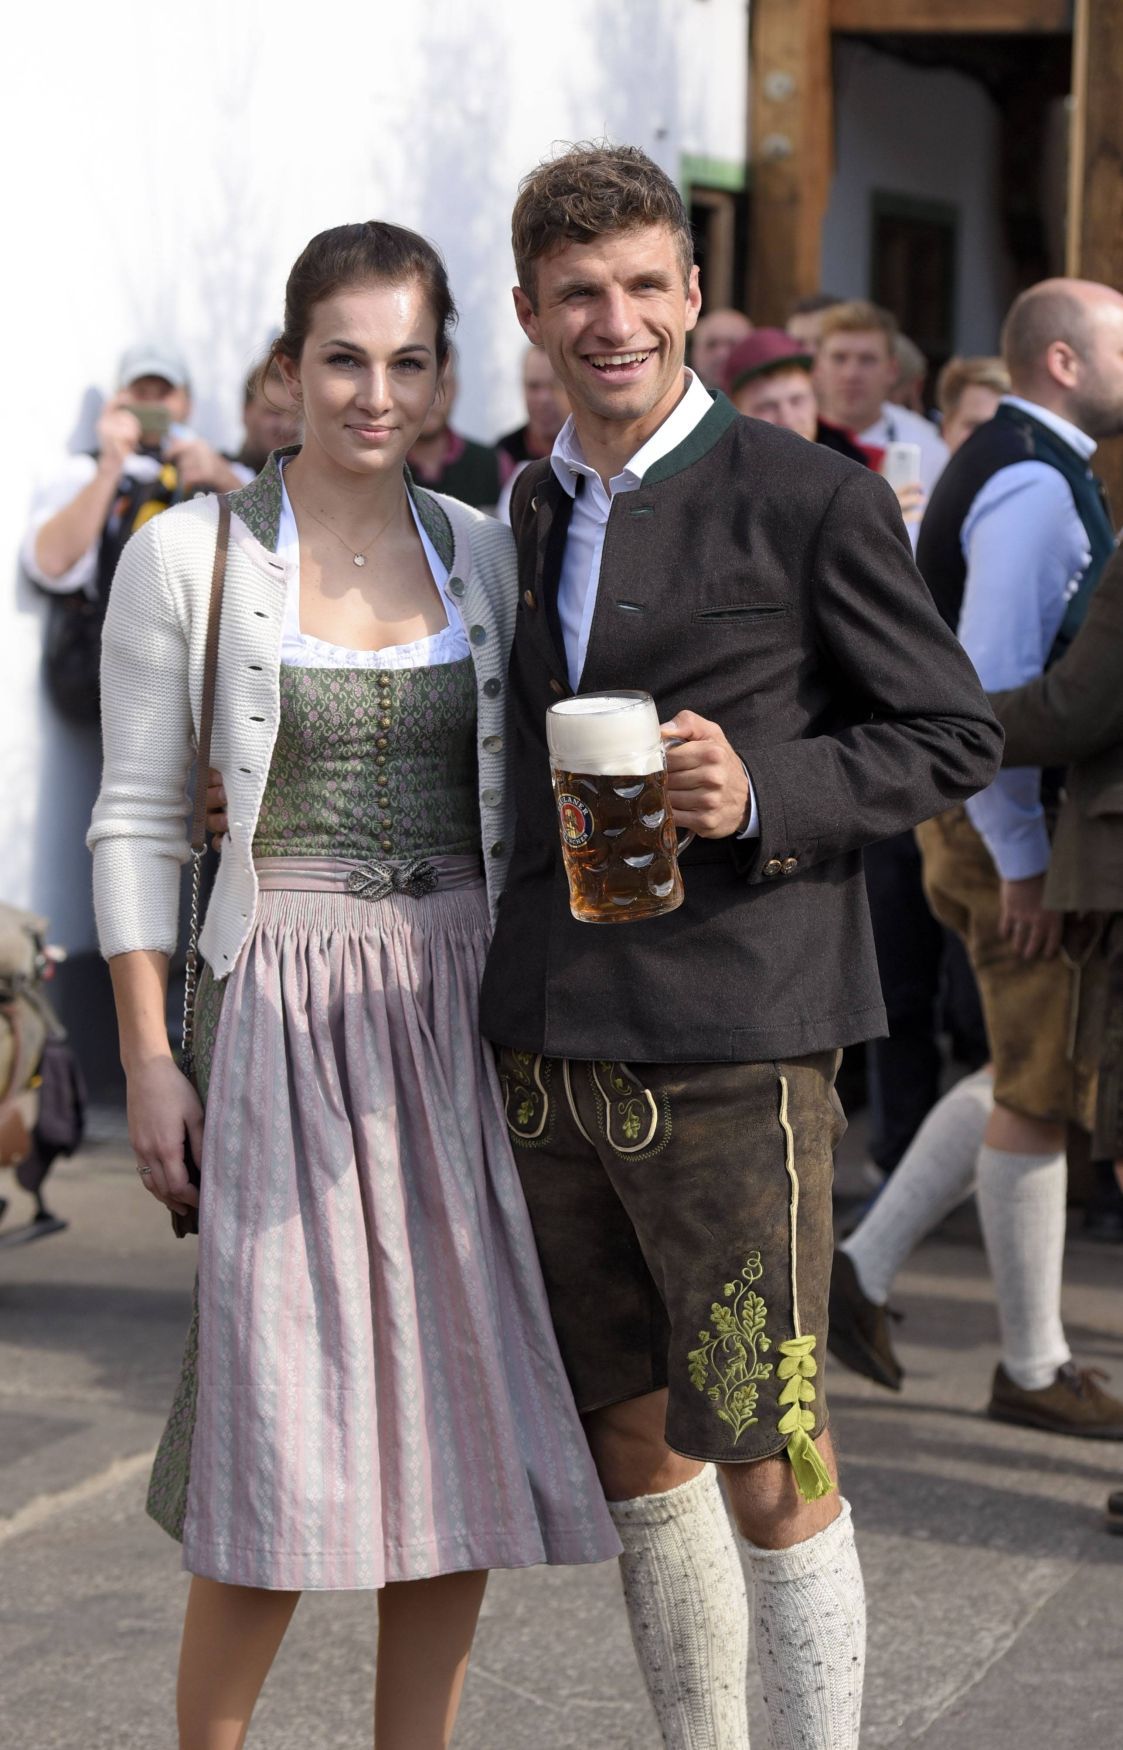 Bayern Mnichov na Oktoberfestu 2015: Thomas Müller a manželka Lisa